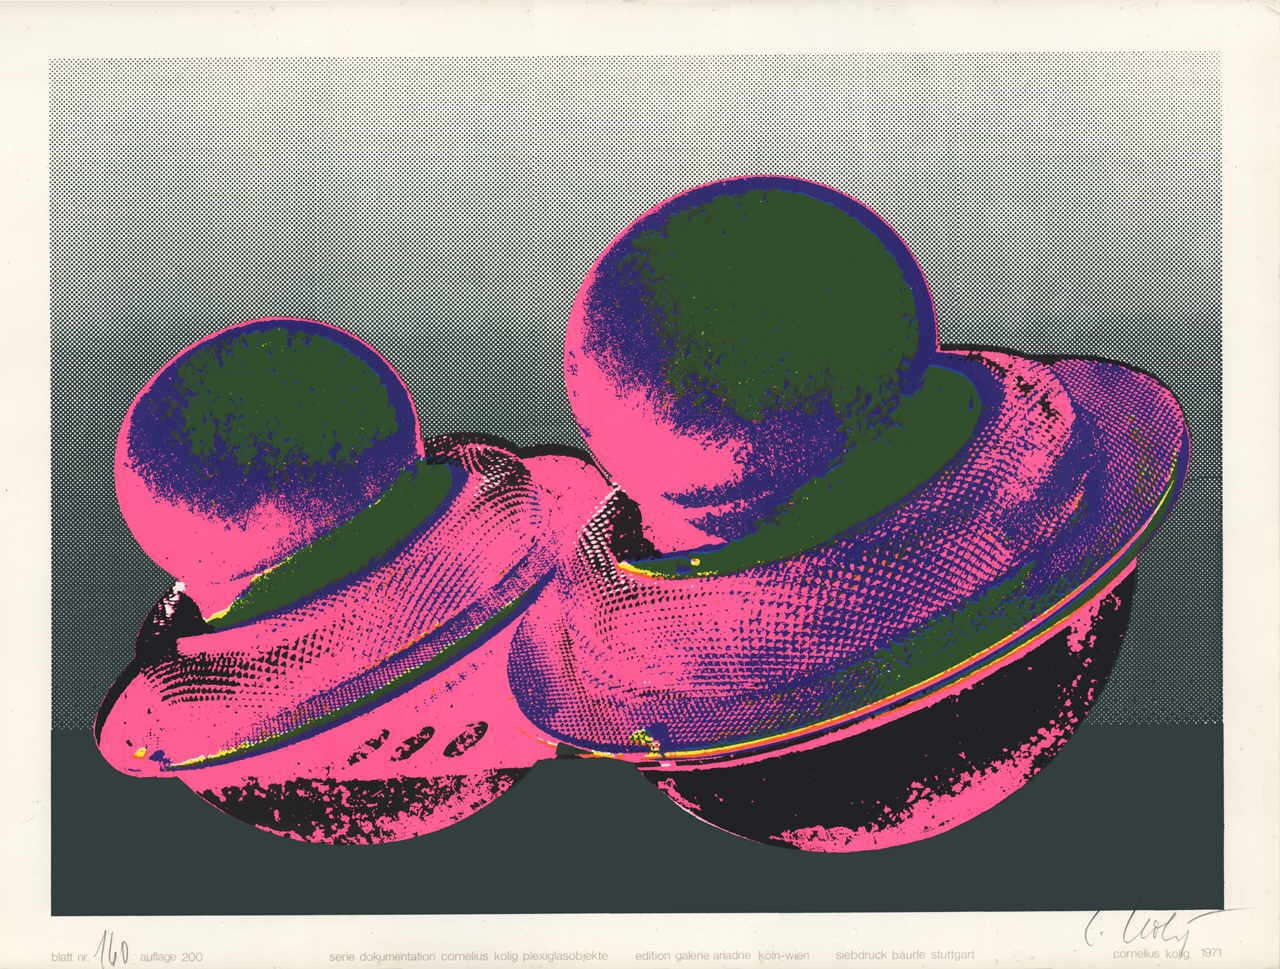 Kolig Cornelius 
Serie "Dokumentation Cornelius Kolig Plexiglasobjekte", 1971
serigrafÃ­a
PapiergrÃ¶ÃŸe 50 x 65 cm